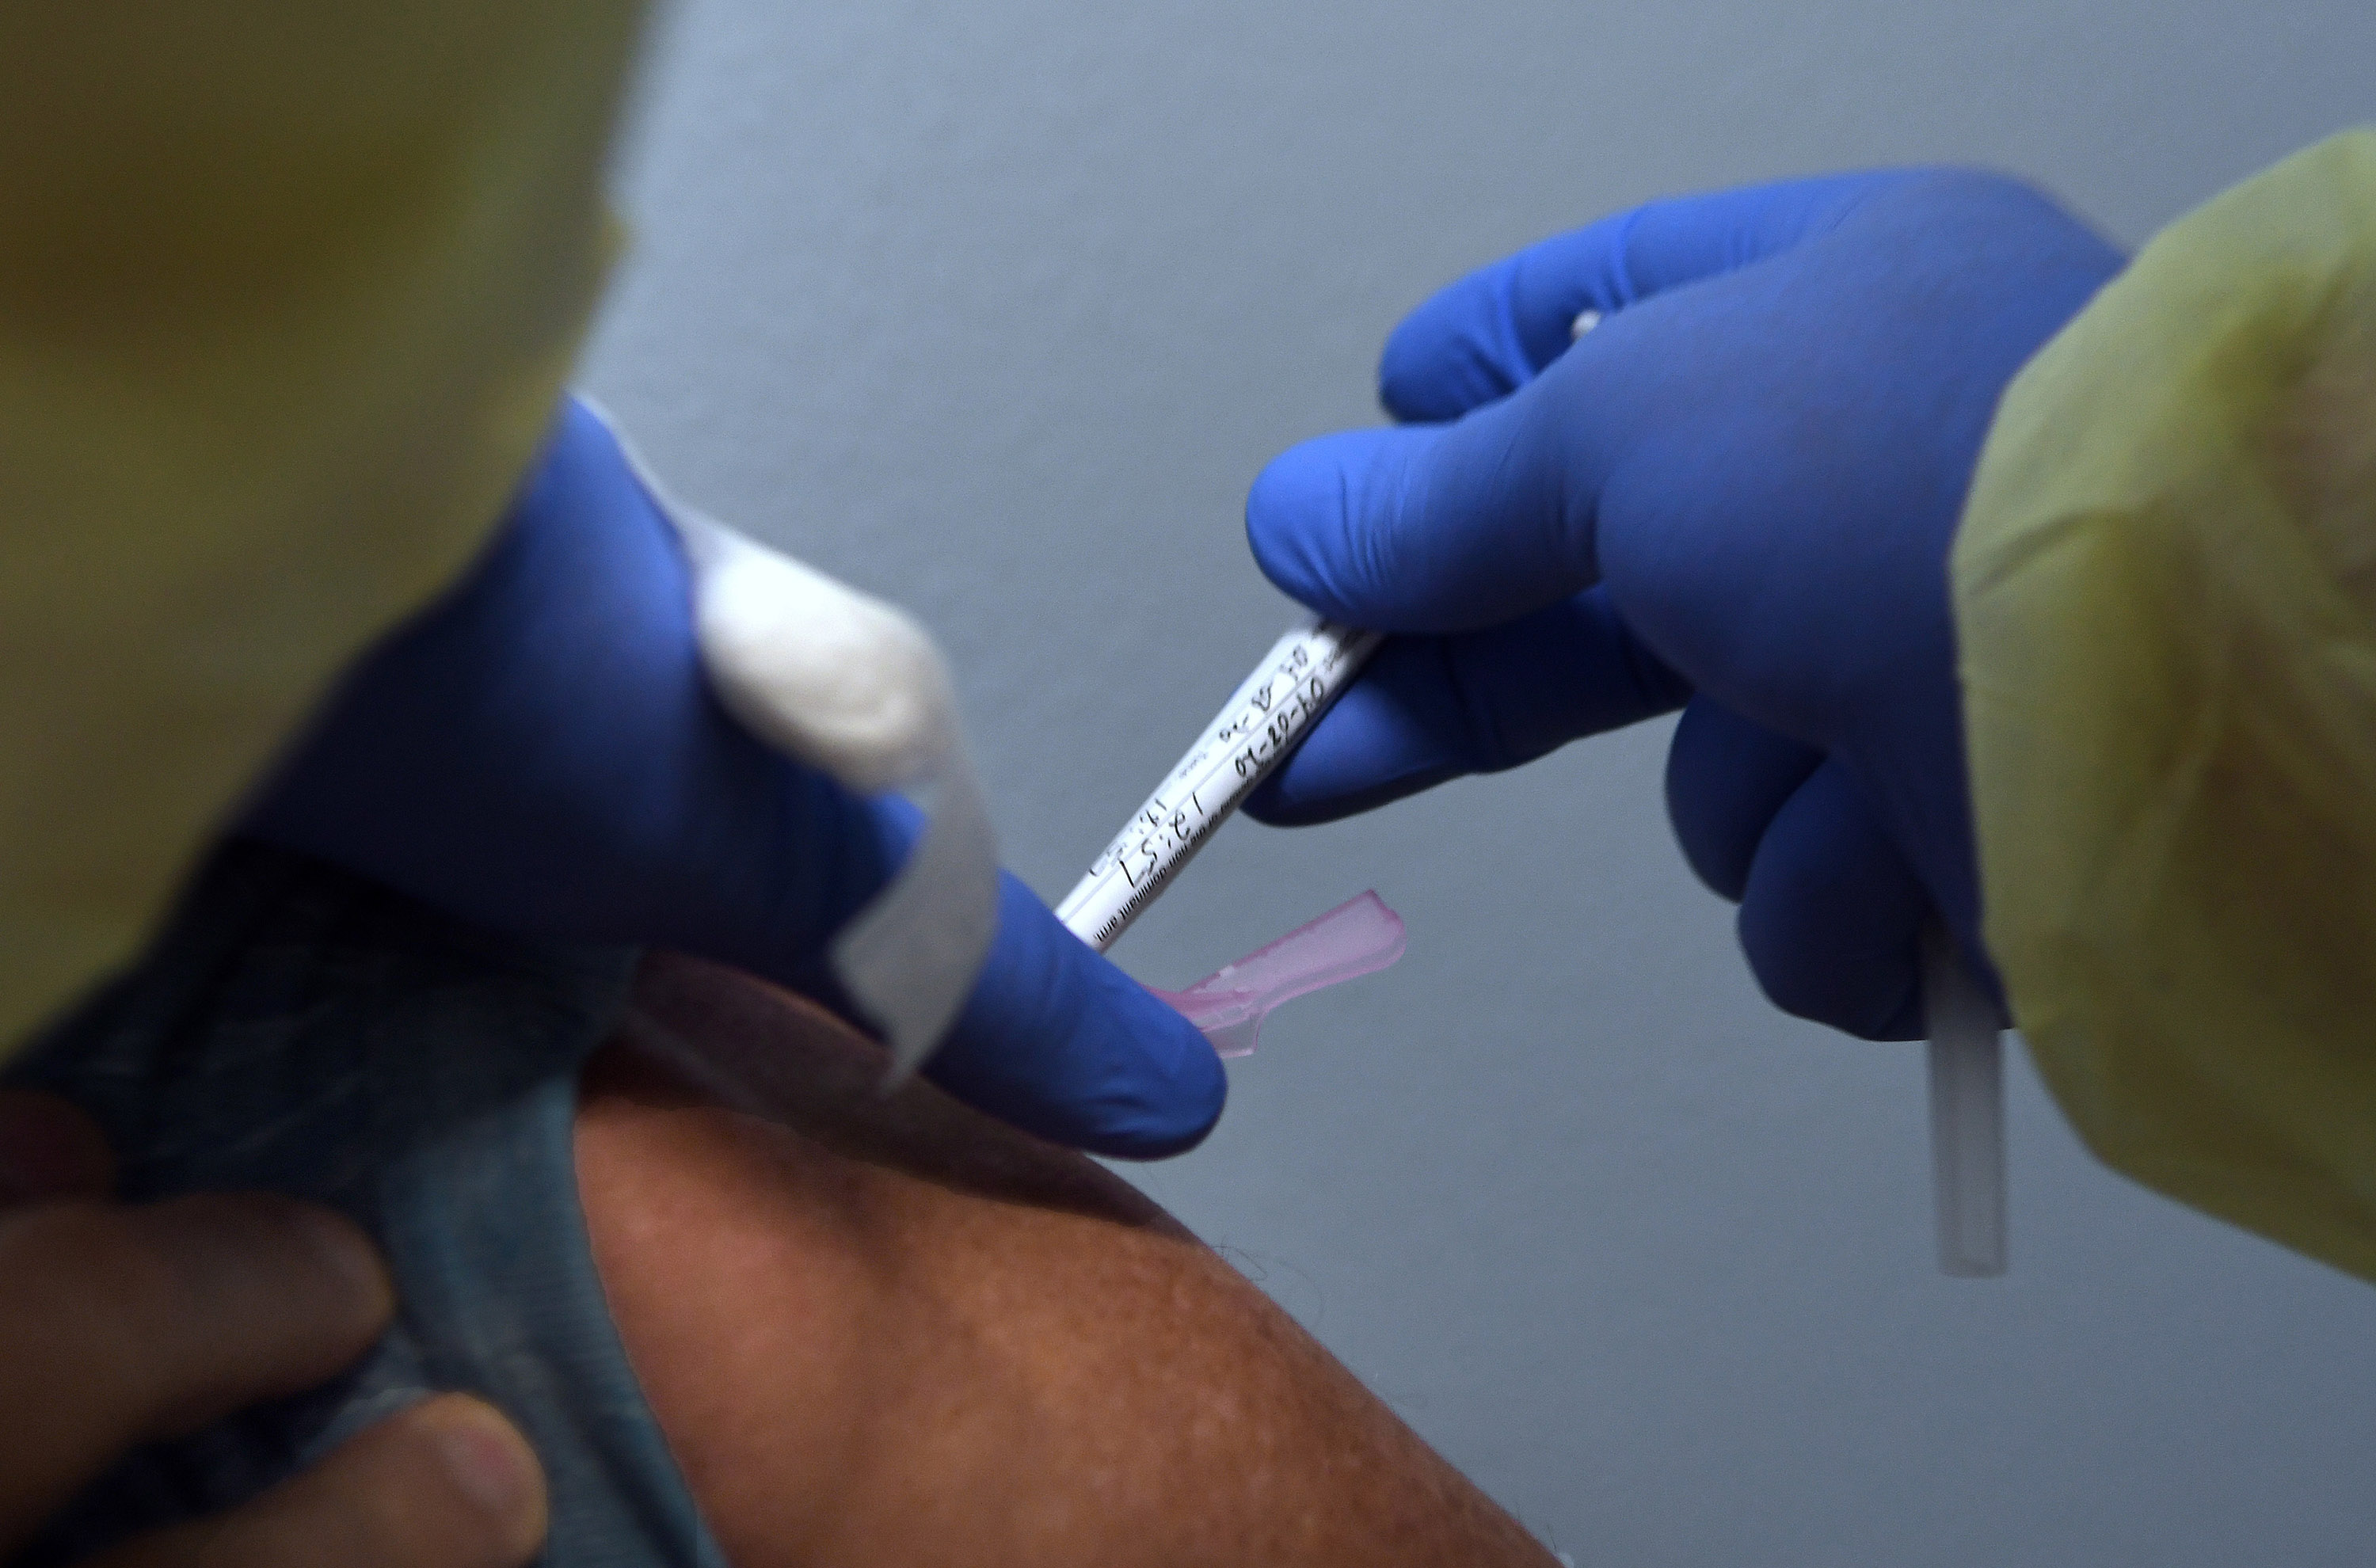 Moderna's vaccine has a significant advantage over Pfizer's